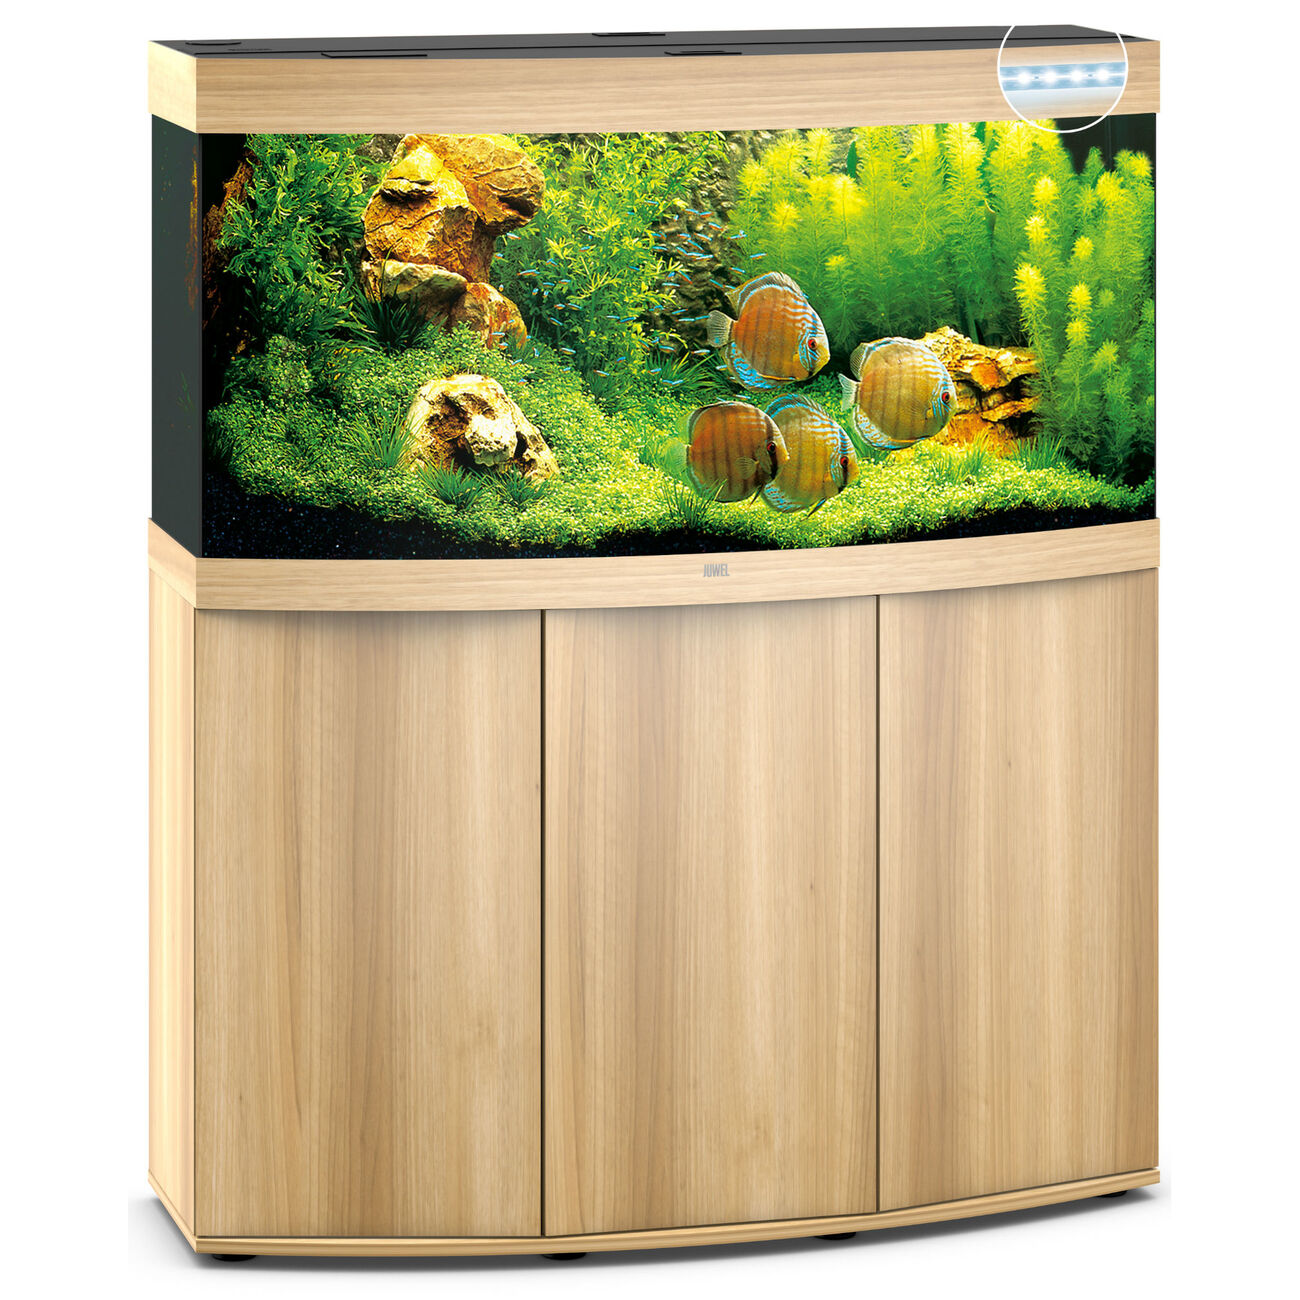 Juwel Vision 260 LED Aquarium mit Unterschrank SBX, 260 Liter, 121 x 46 x (64+80) cm, helles Holz